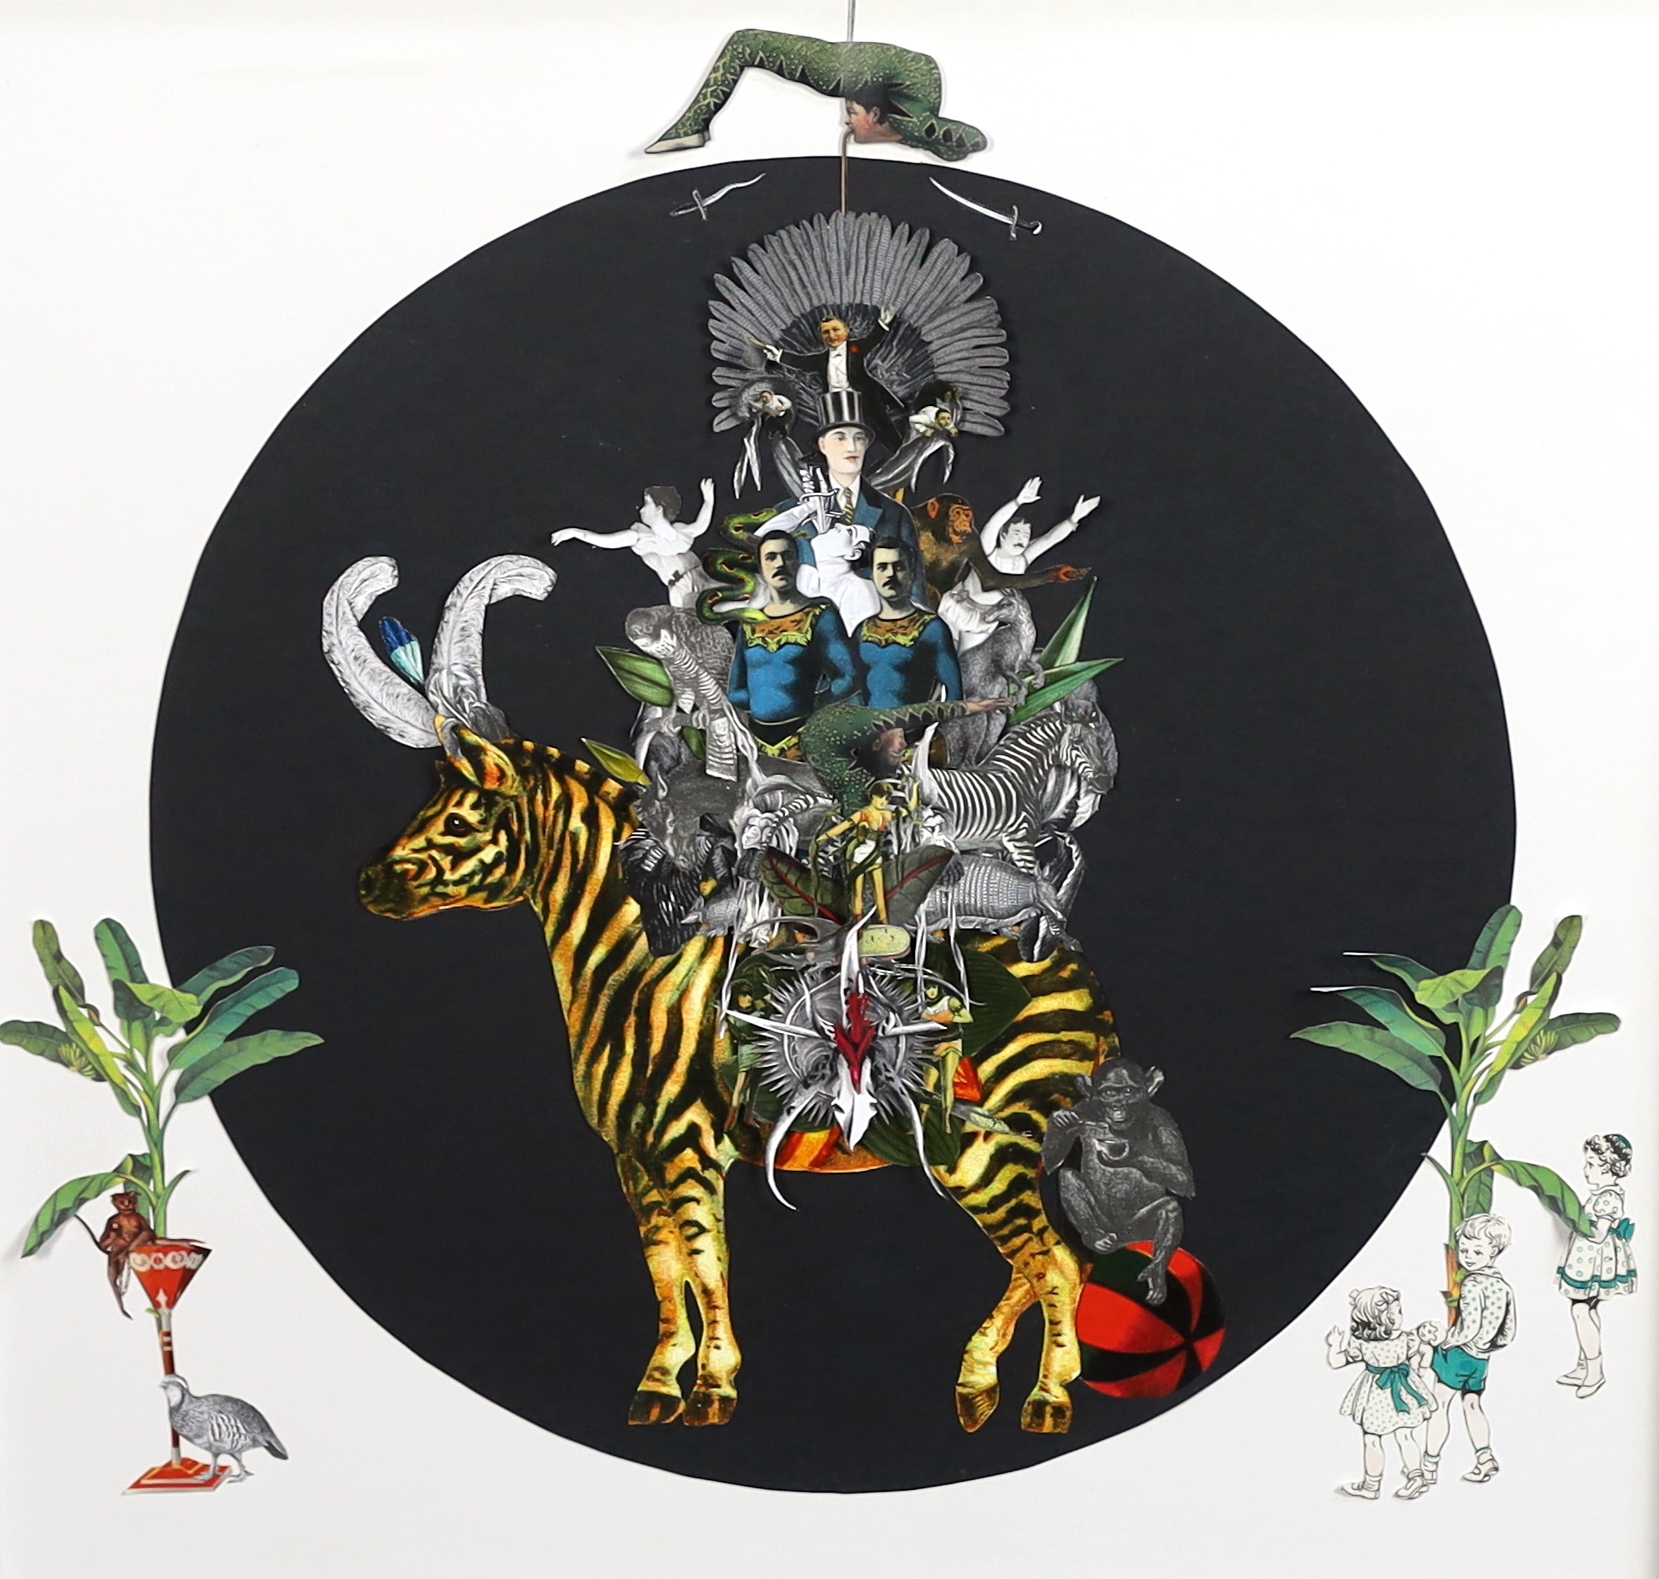 Jana Nicole (American, 1967-), 'Les Circus Des Enfants', collage and mixed media, 59 x 59cm